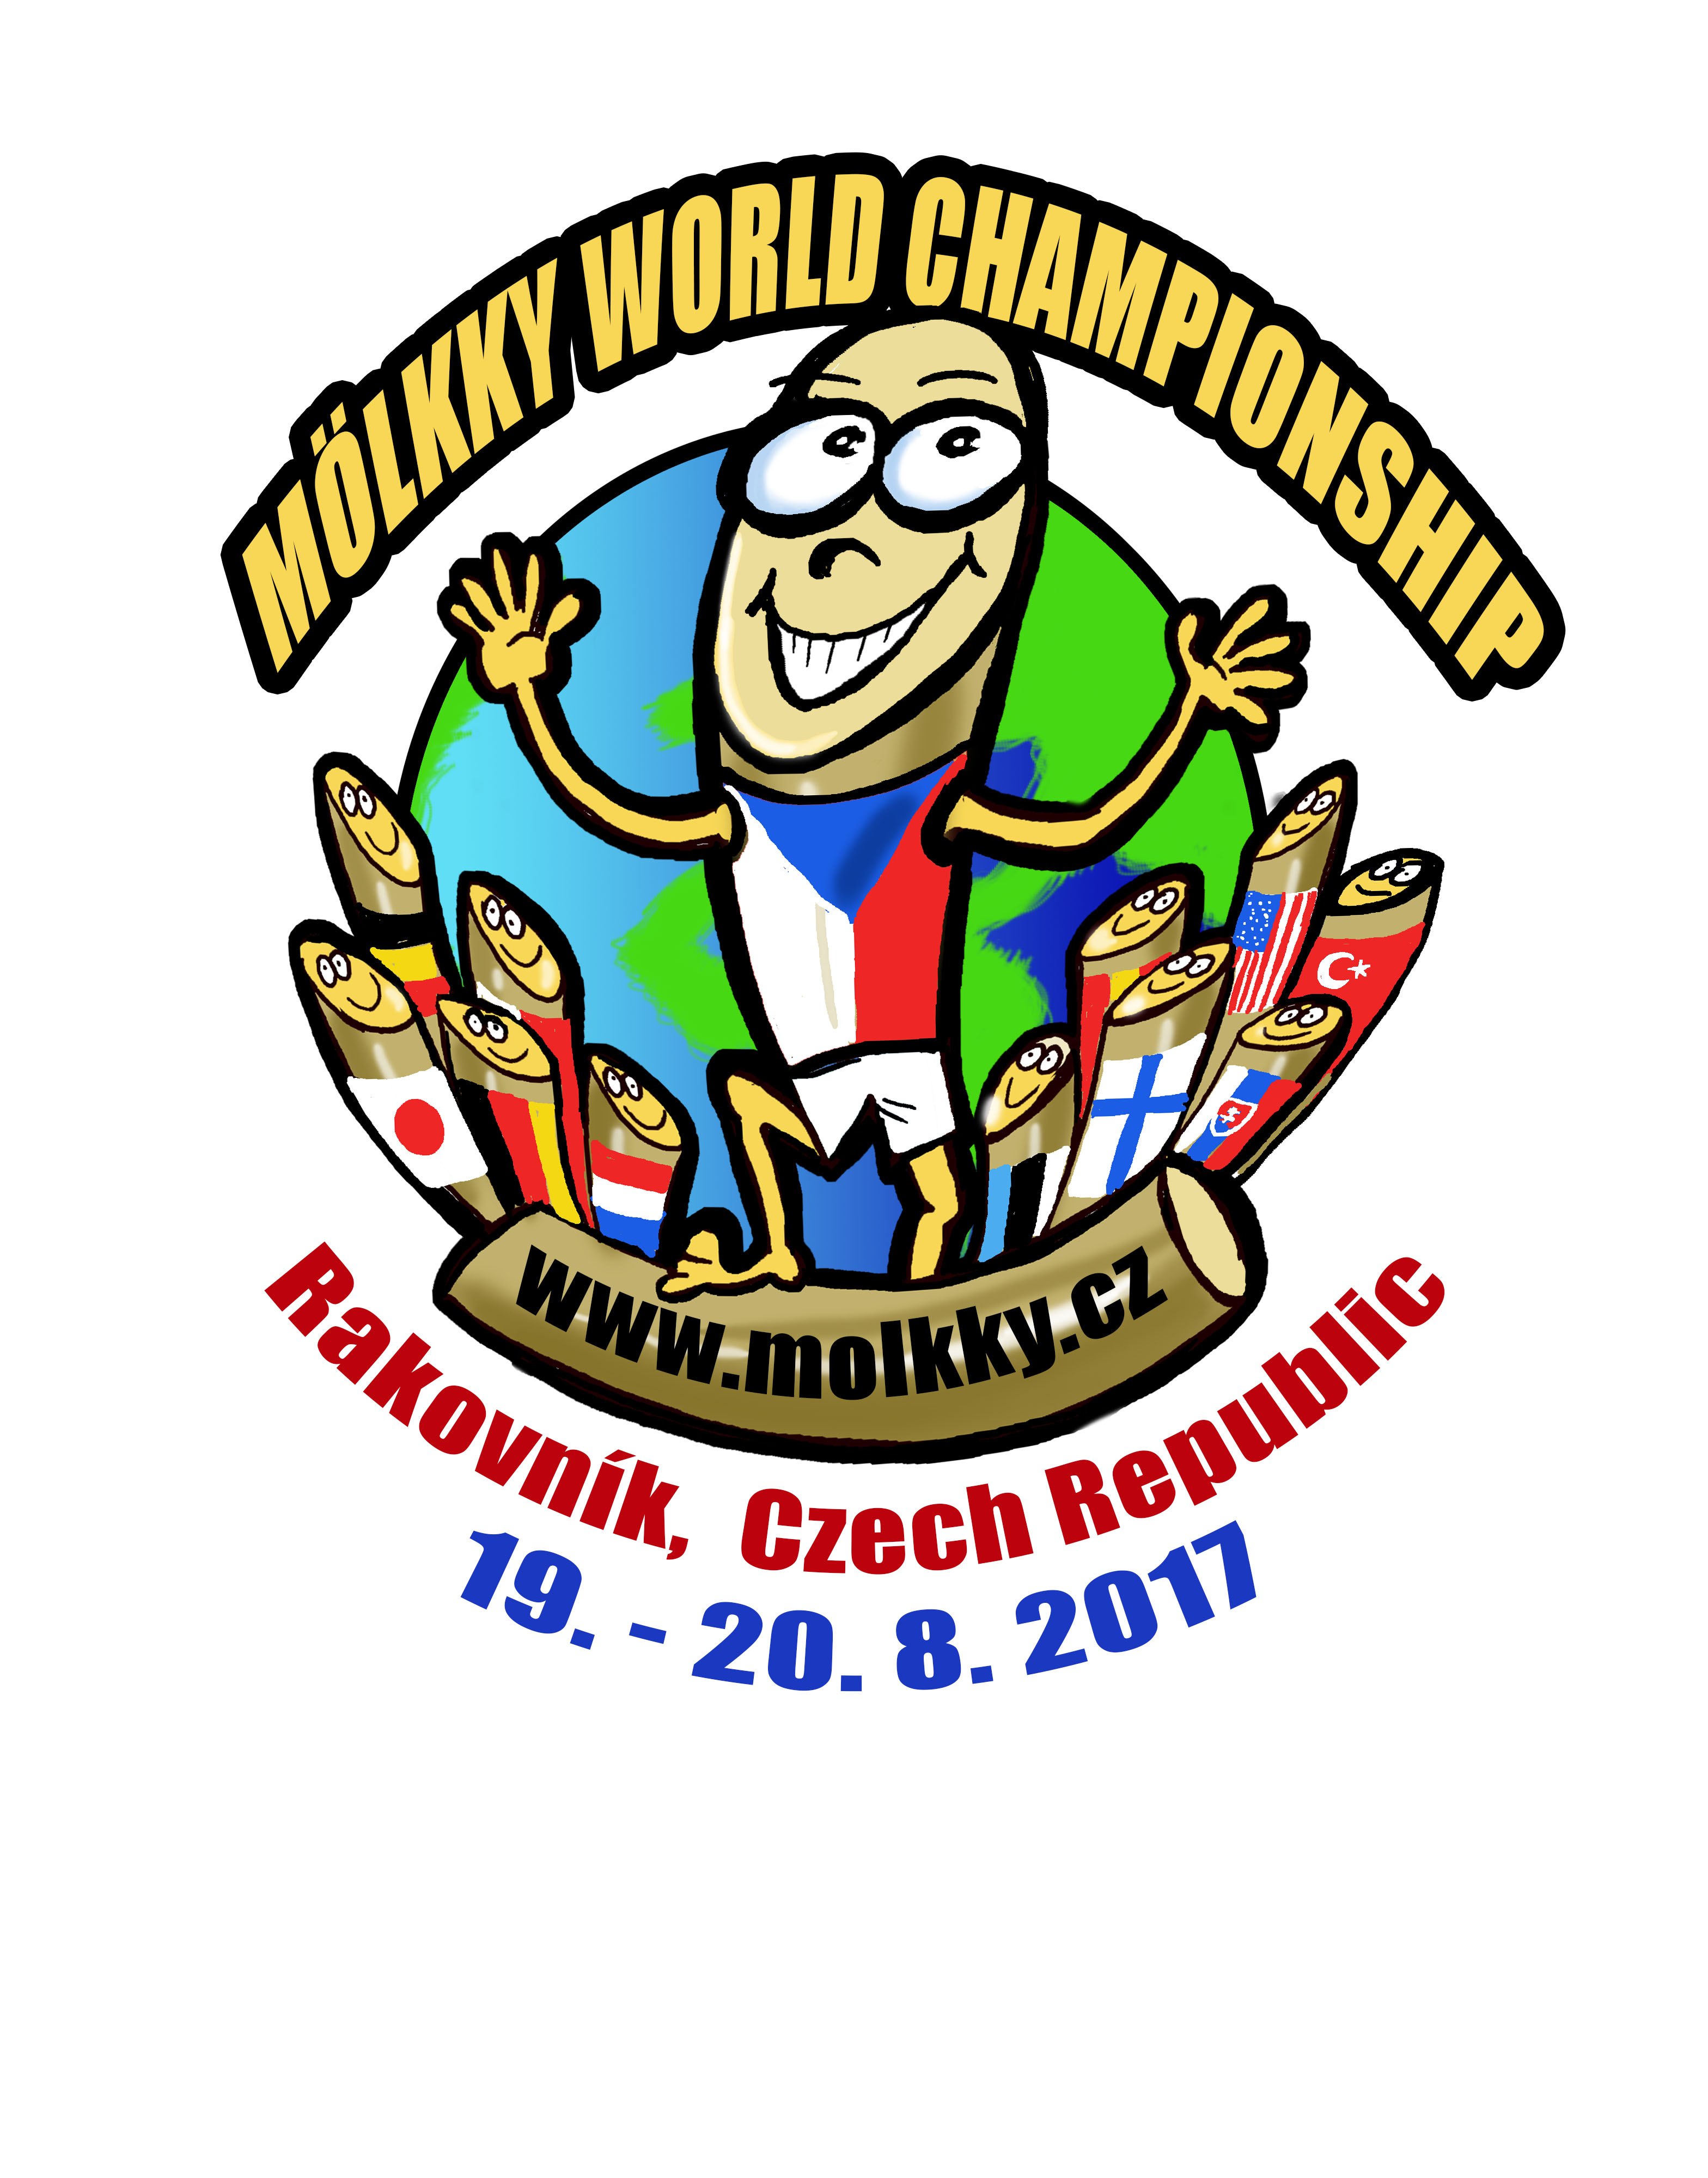 Mölkky World Championship 2017.